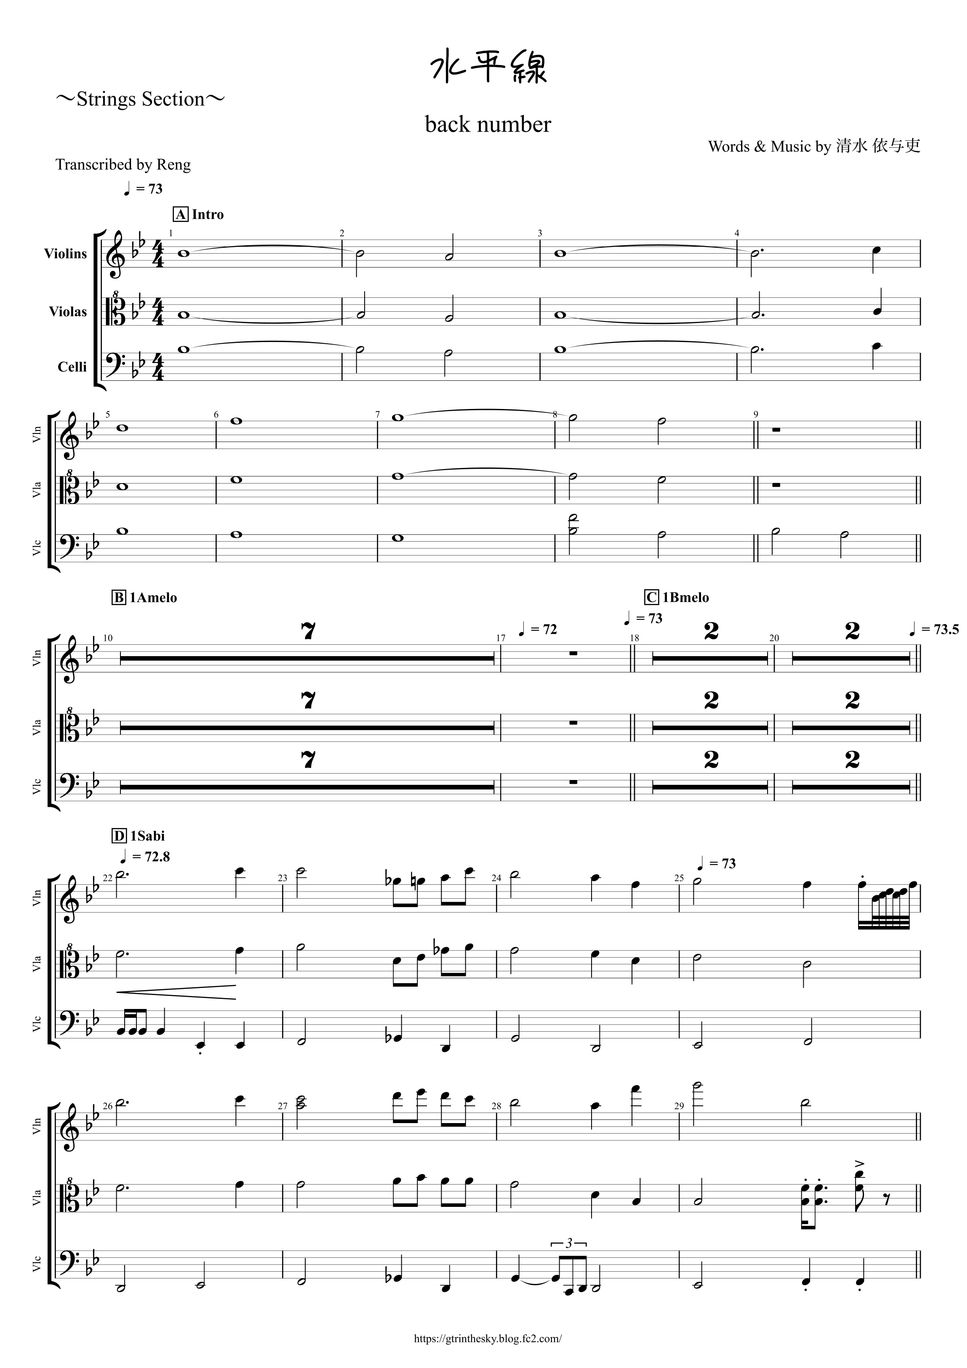 back number - 水平線 (Stringsセクション/Vln/Vla/Vlc/Cb/弦楽器) by Score by Reng